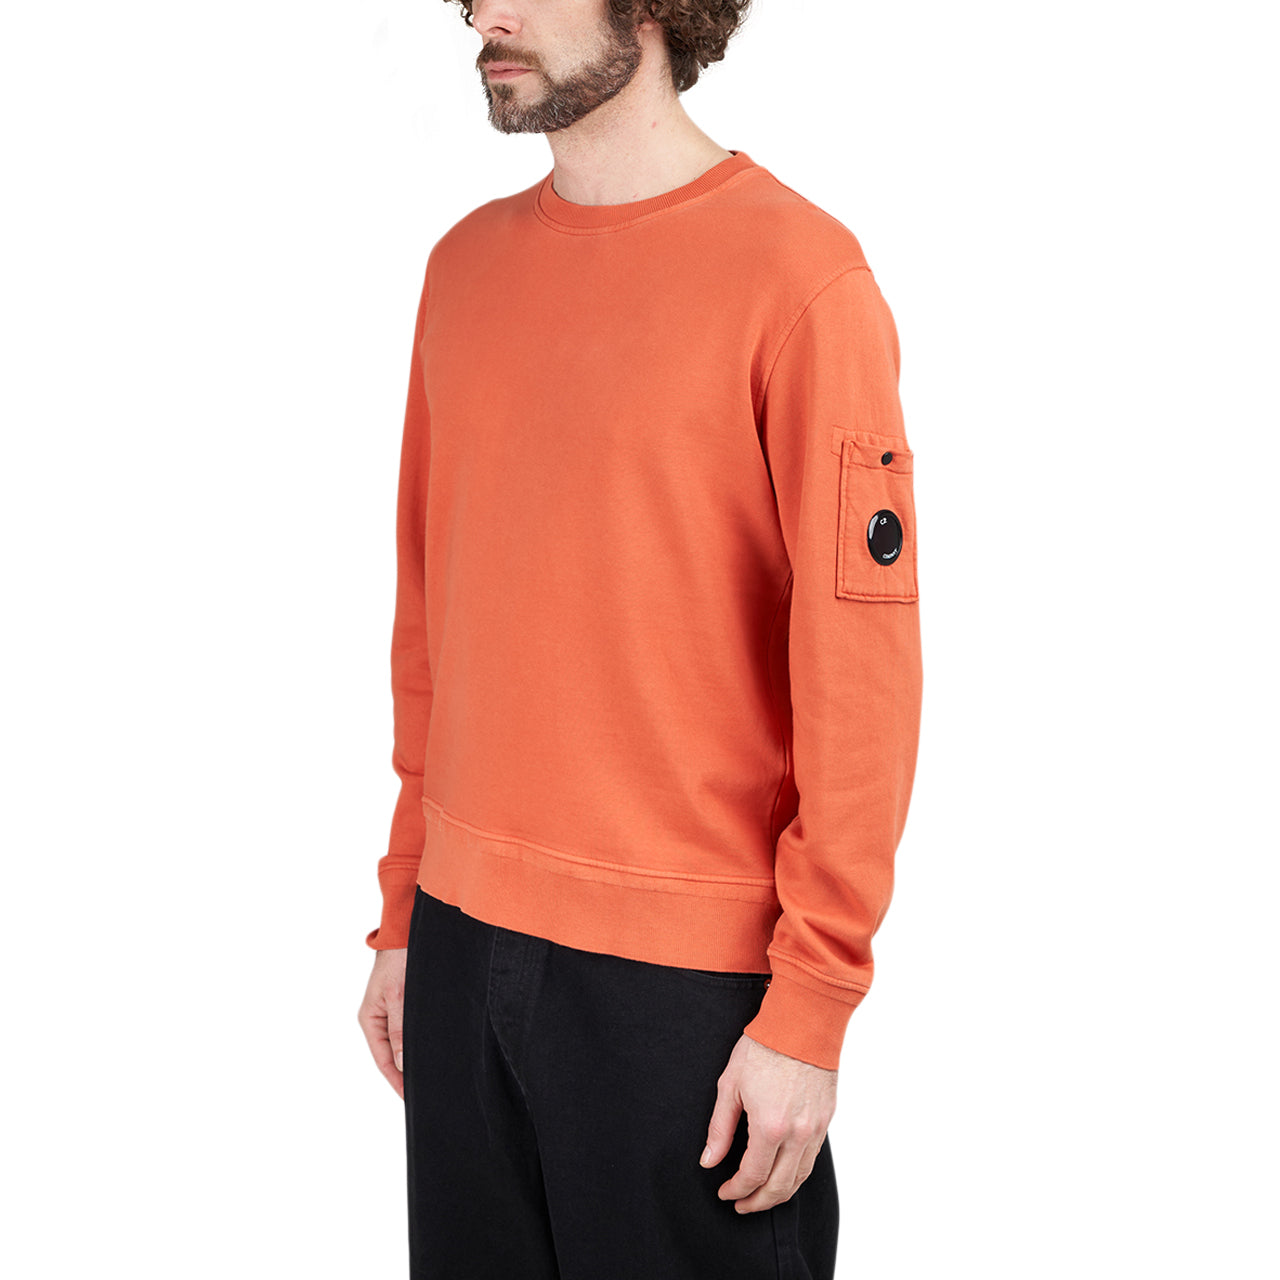 C.P. Company Cotton Fleece Resist Dyed Sweatshirt (Orange)  - Cheap Witzenberg Jordan Outlet